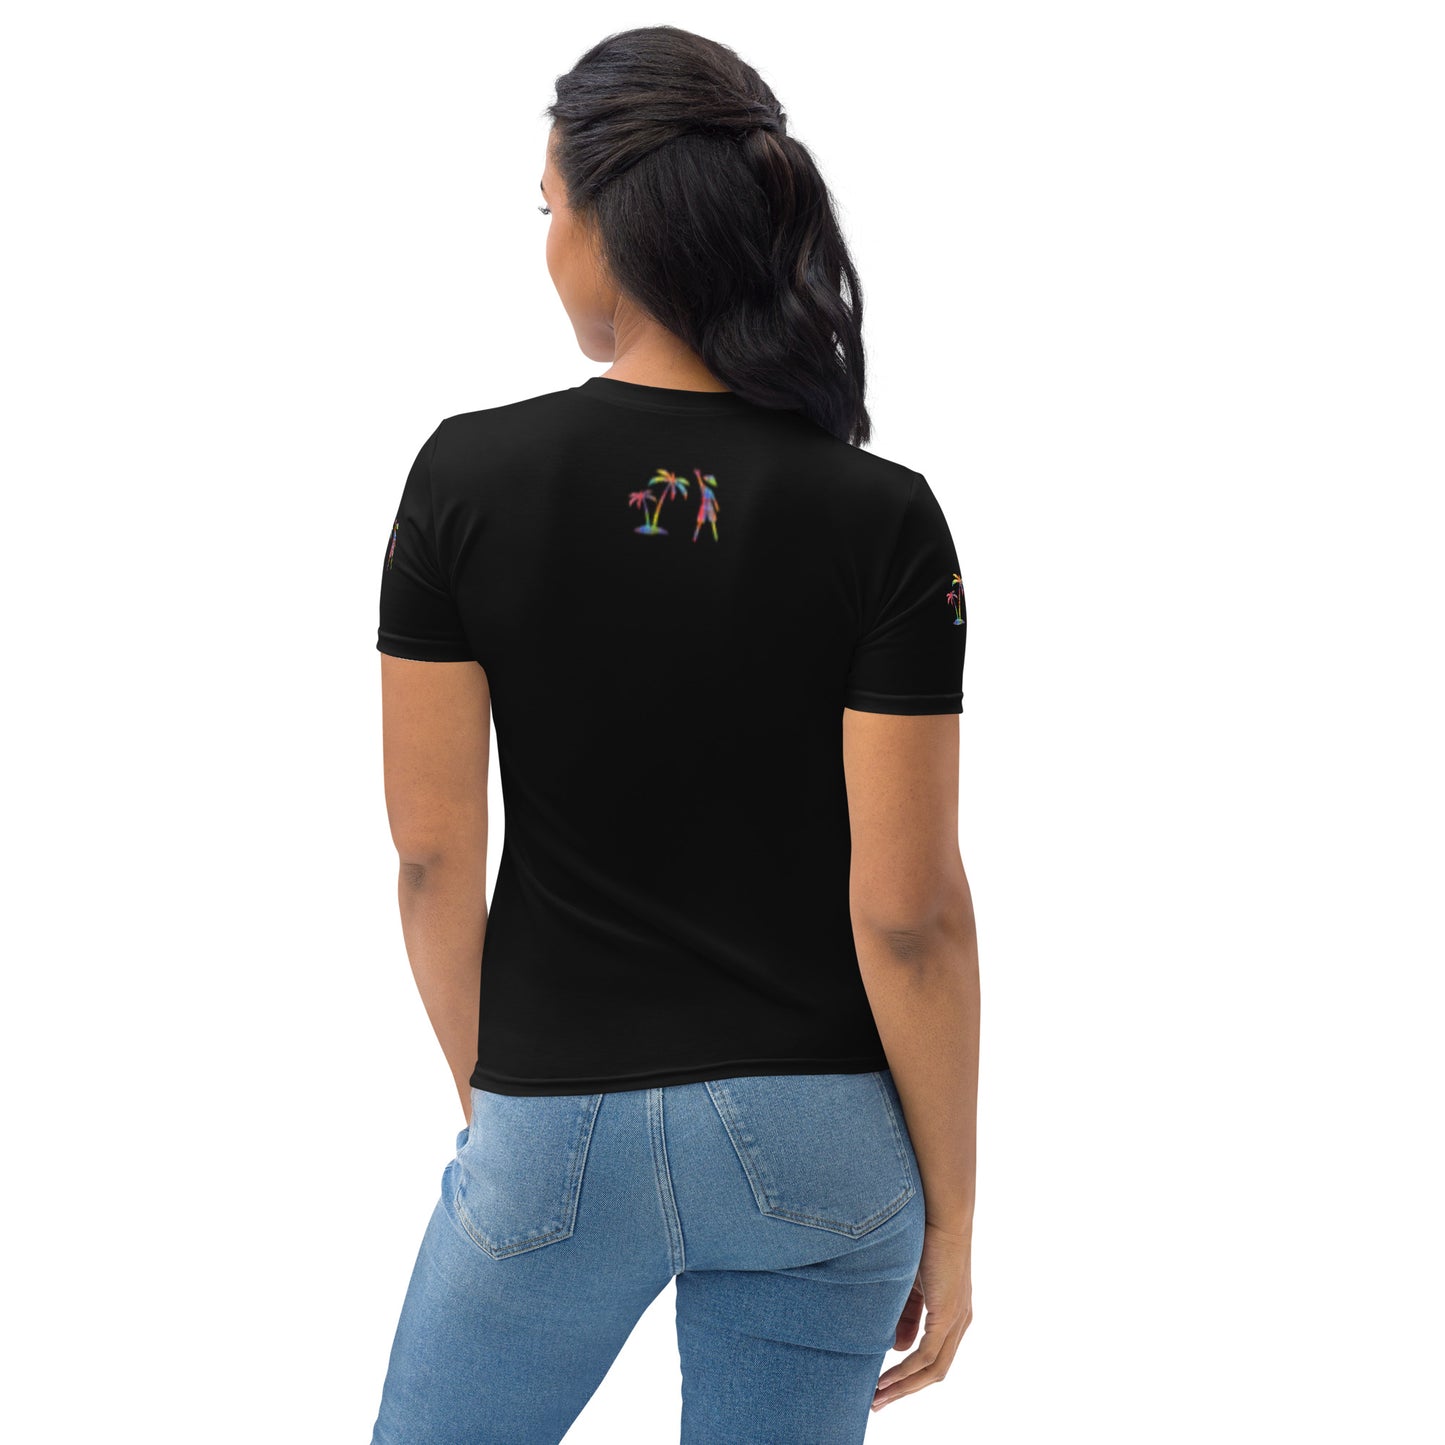 Black V.Localized (Madras) Dry-Fit Women's T-shirt